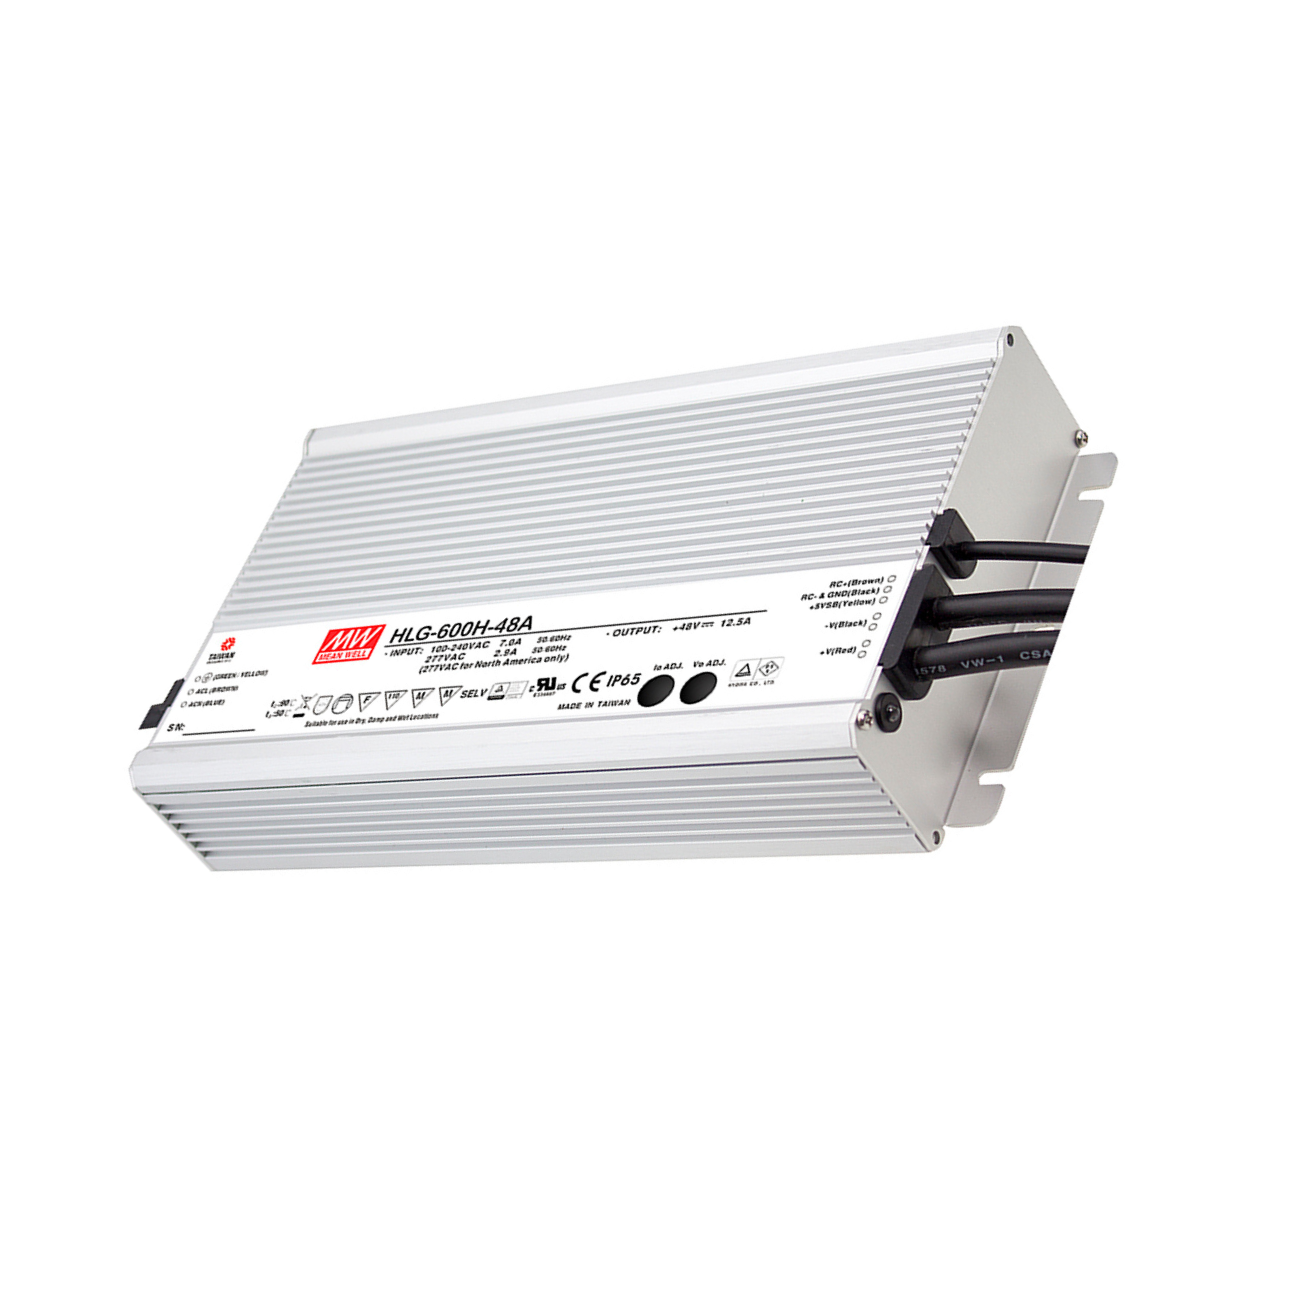 MeanWell HLG-600H-15AB (540W/15V) LED-Netzteil (dimmbar)